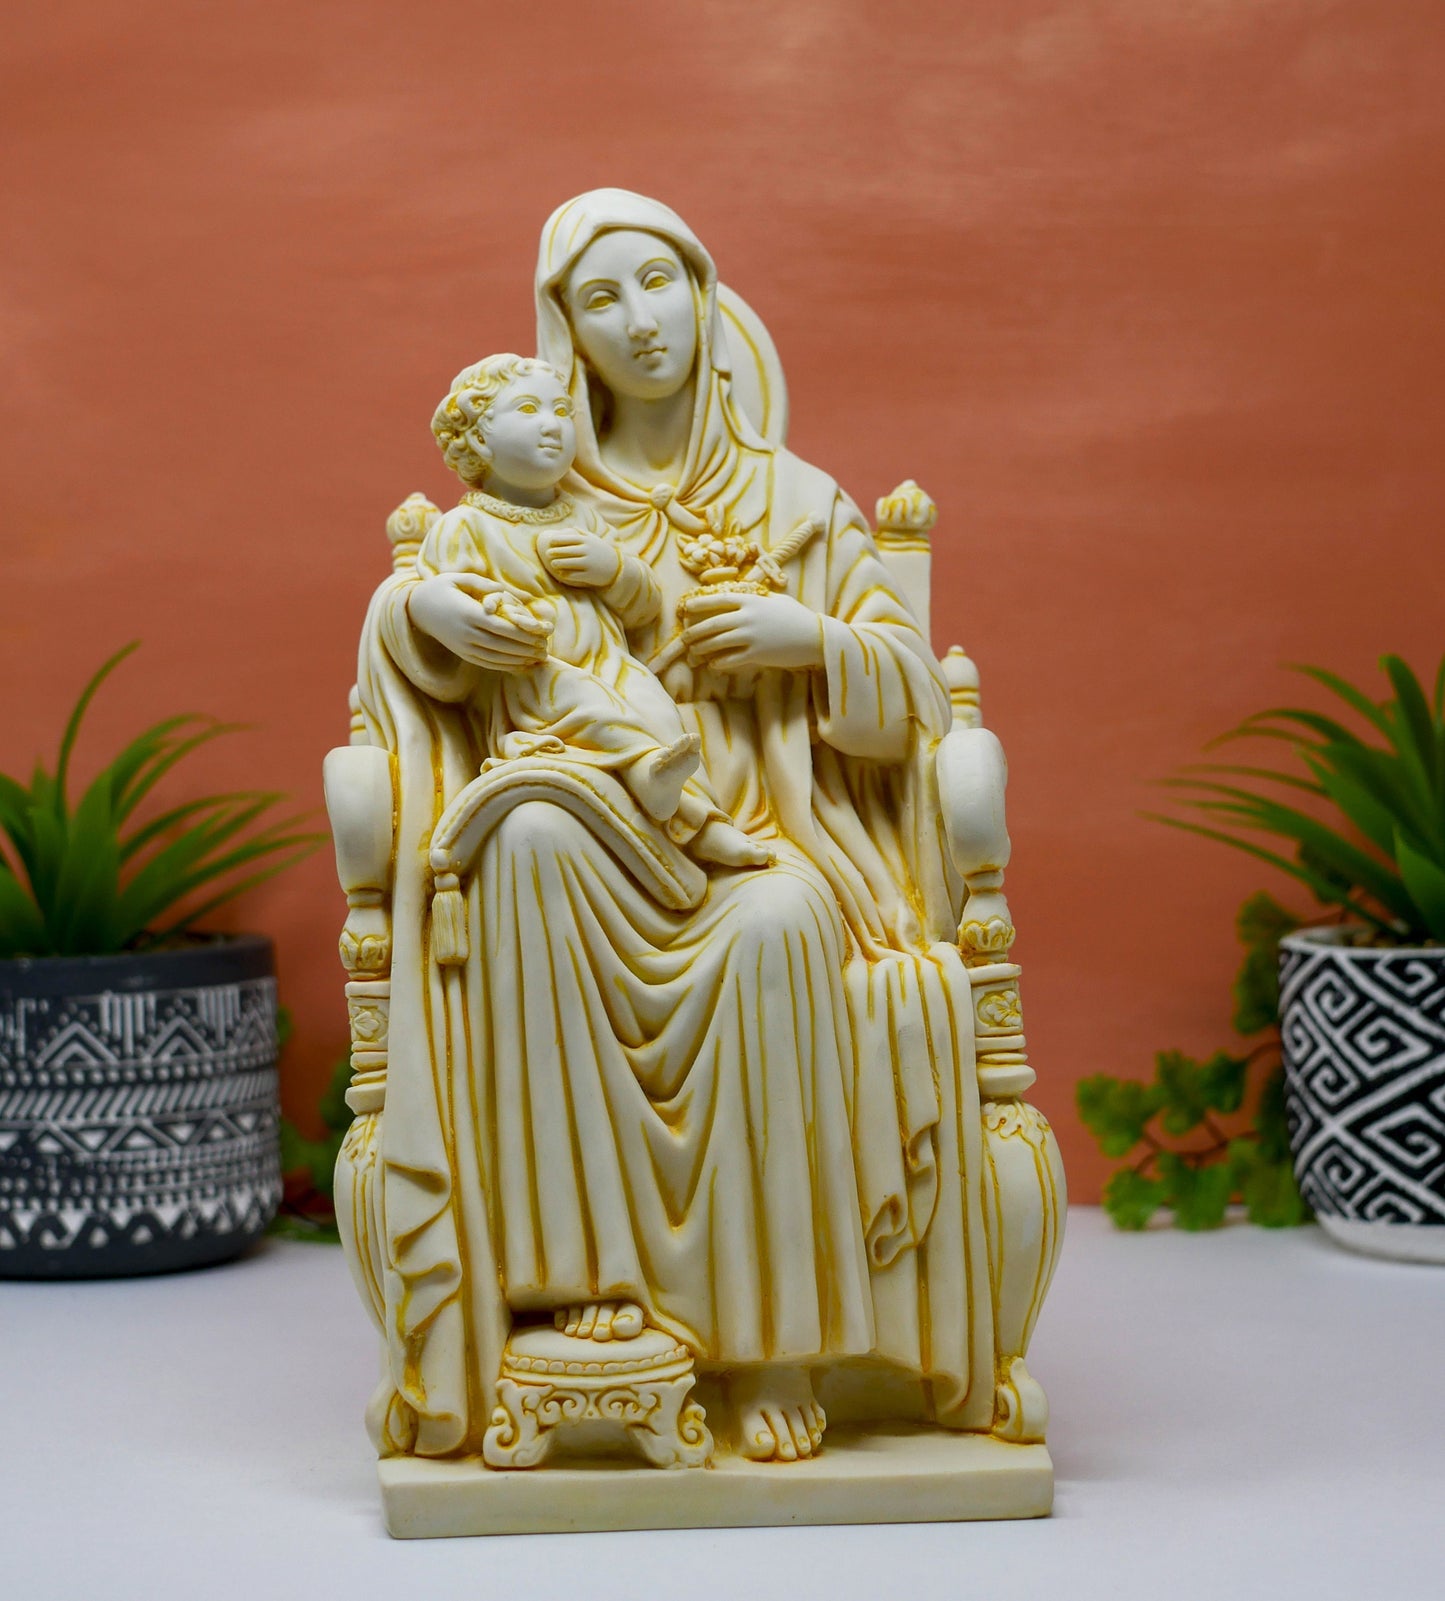 Virgin Mary Holding Child Jesus Resin Statue - Religious Art Decor Sculpture - 10.5" Tall